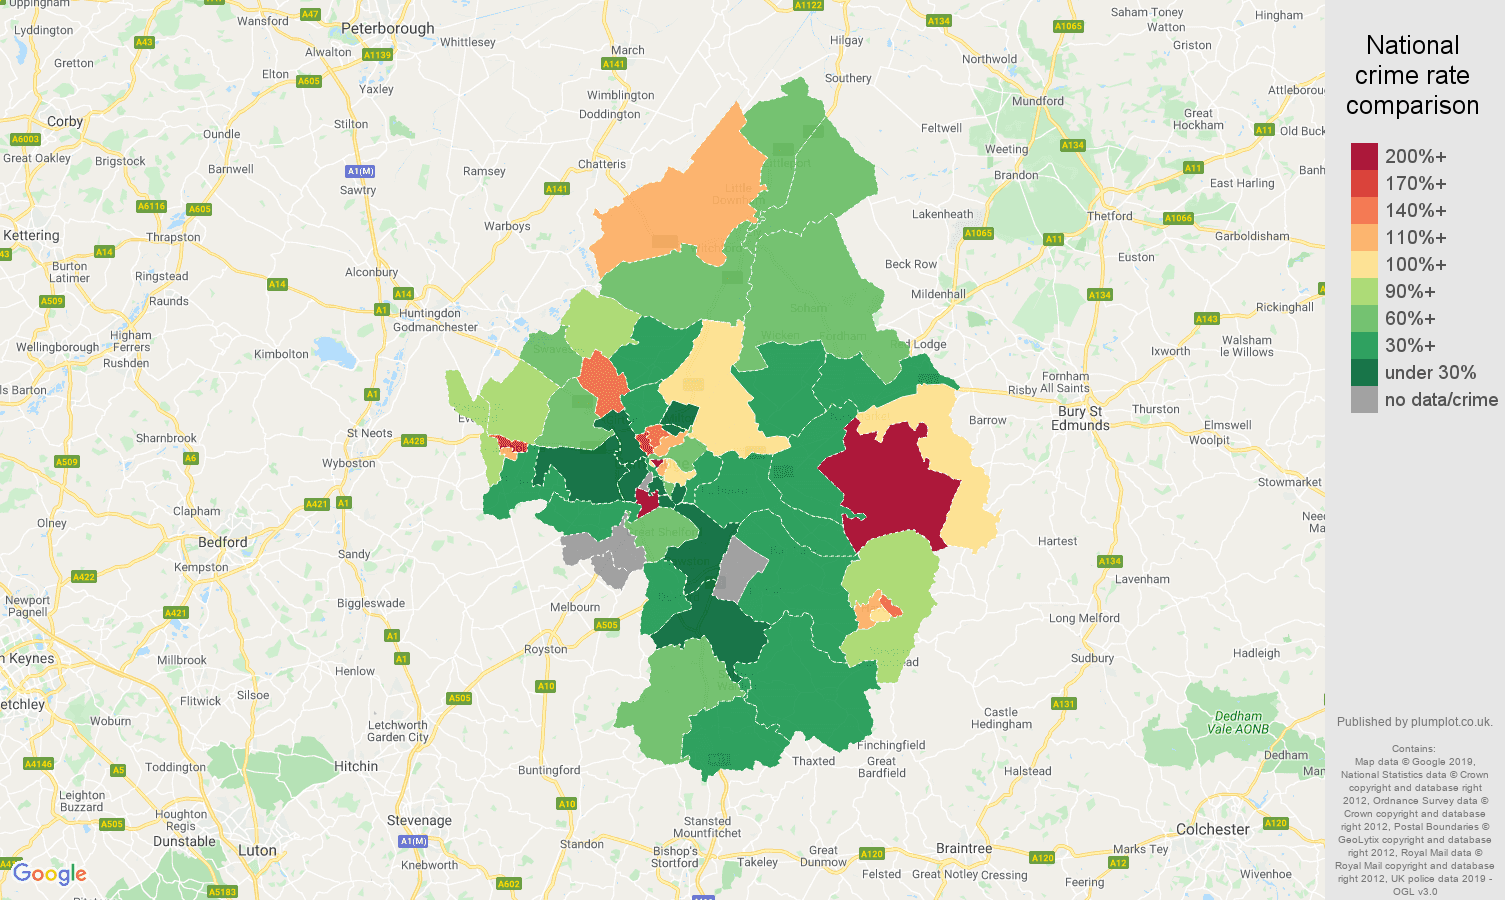 Cambridge other crime rate comparison map